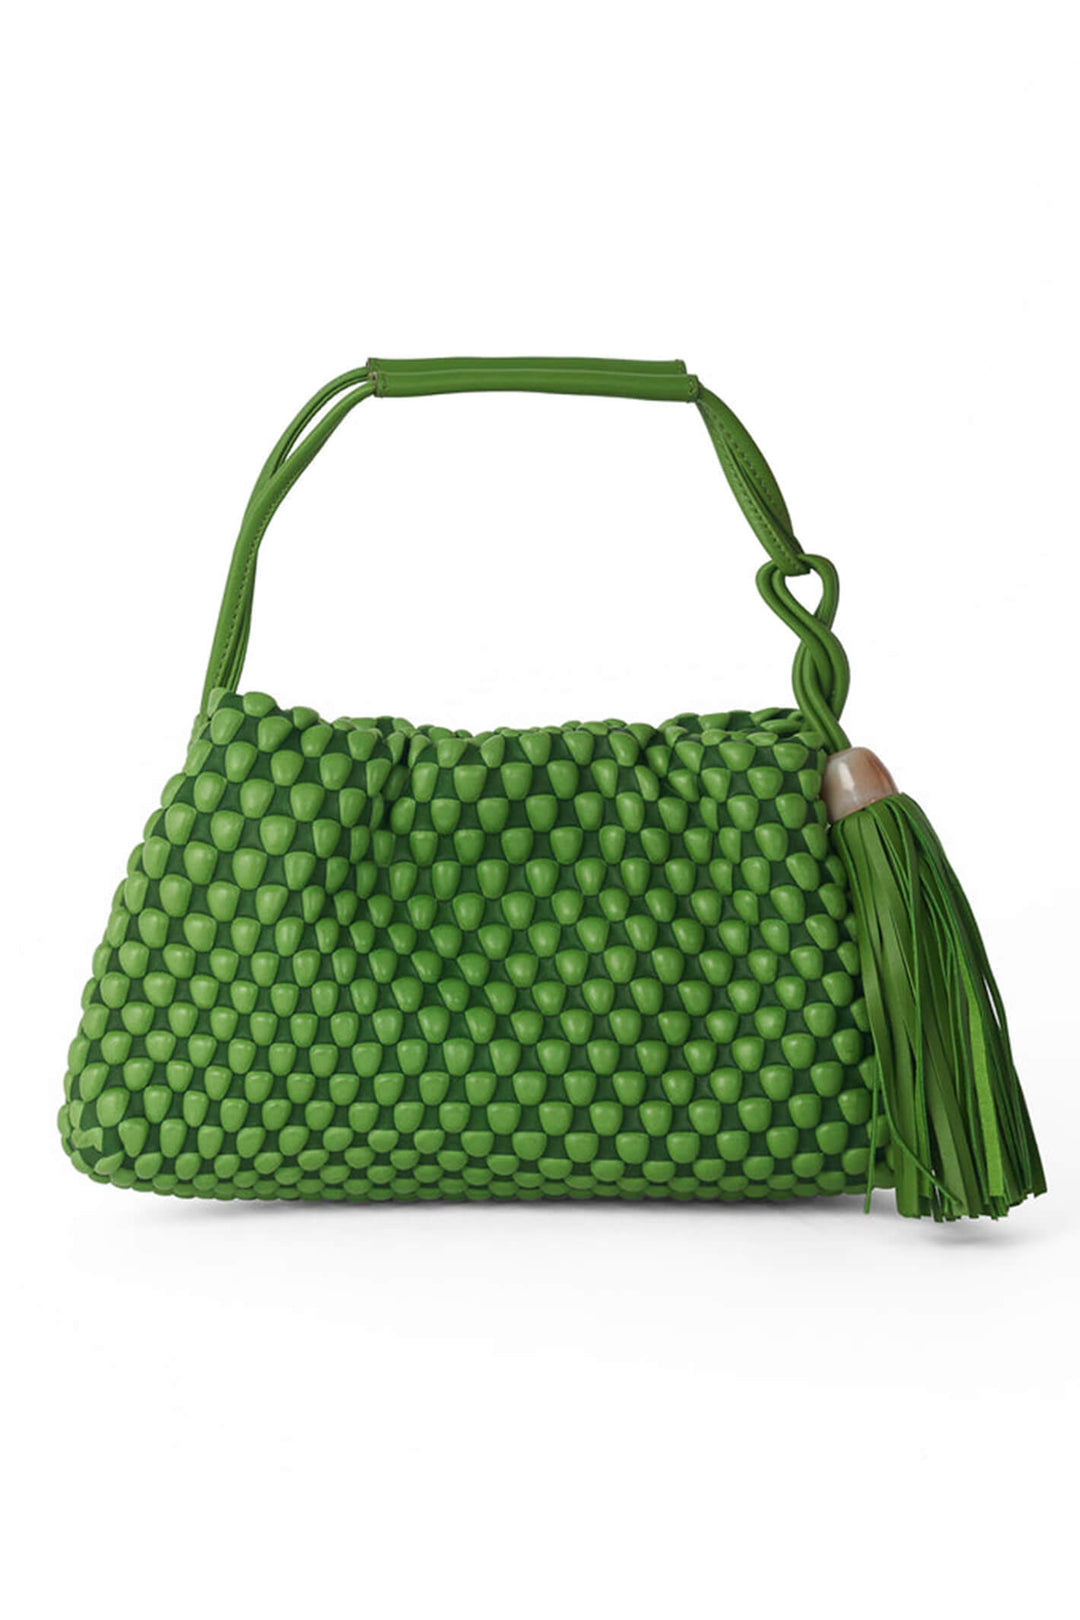 Tissa Fontaneda B80 Tango Nappa Leather Spring Green Bubble Bag - Olivia Grace Fashion